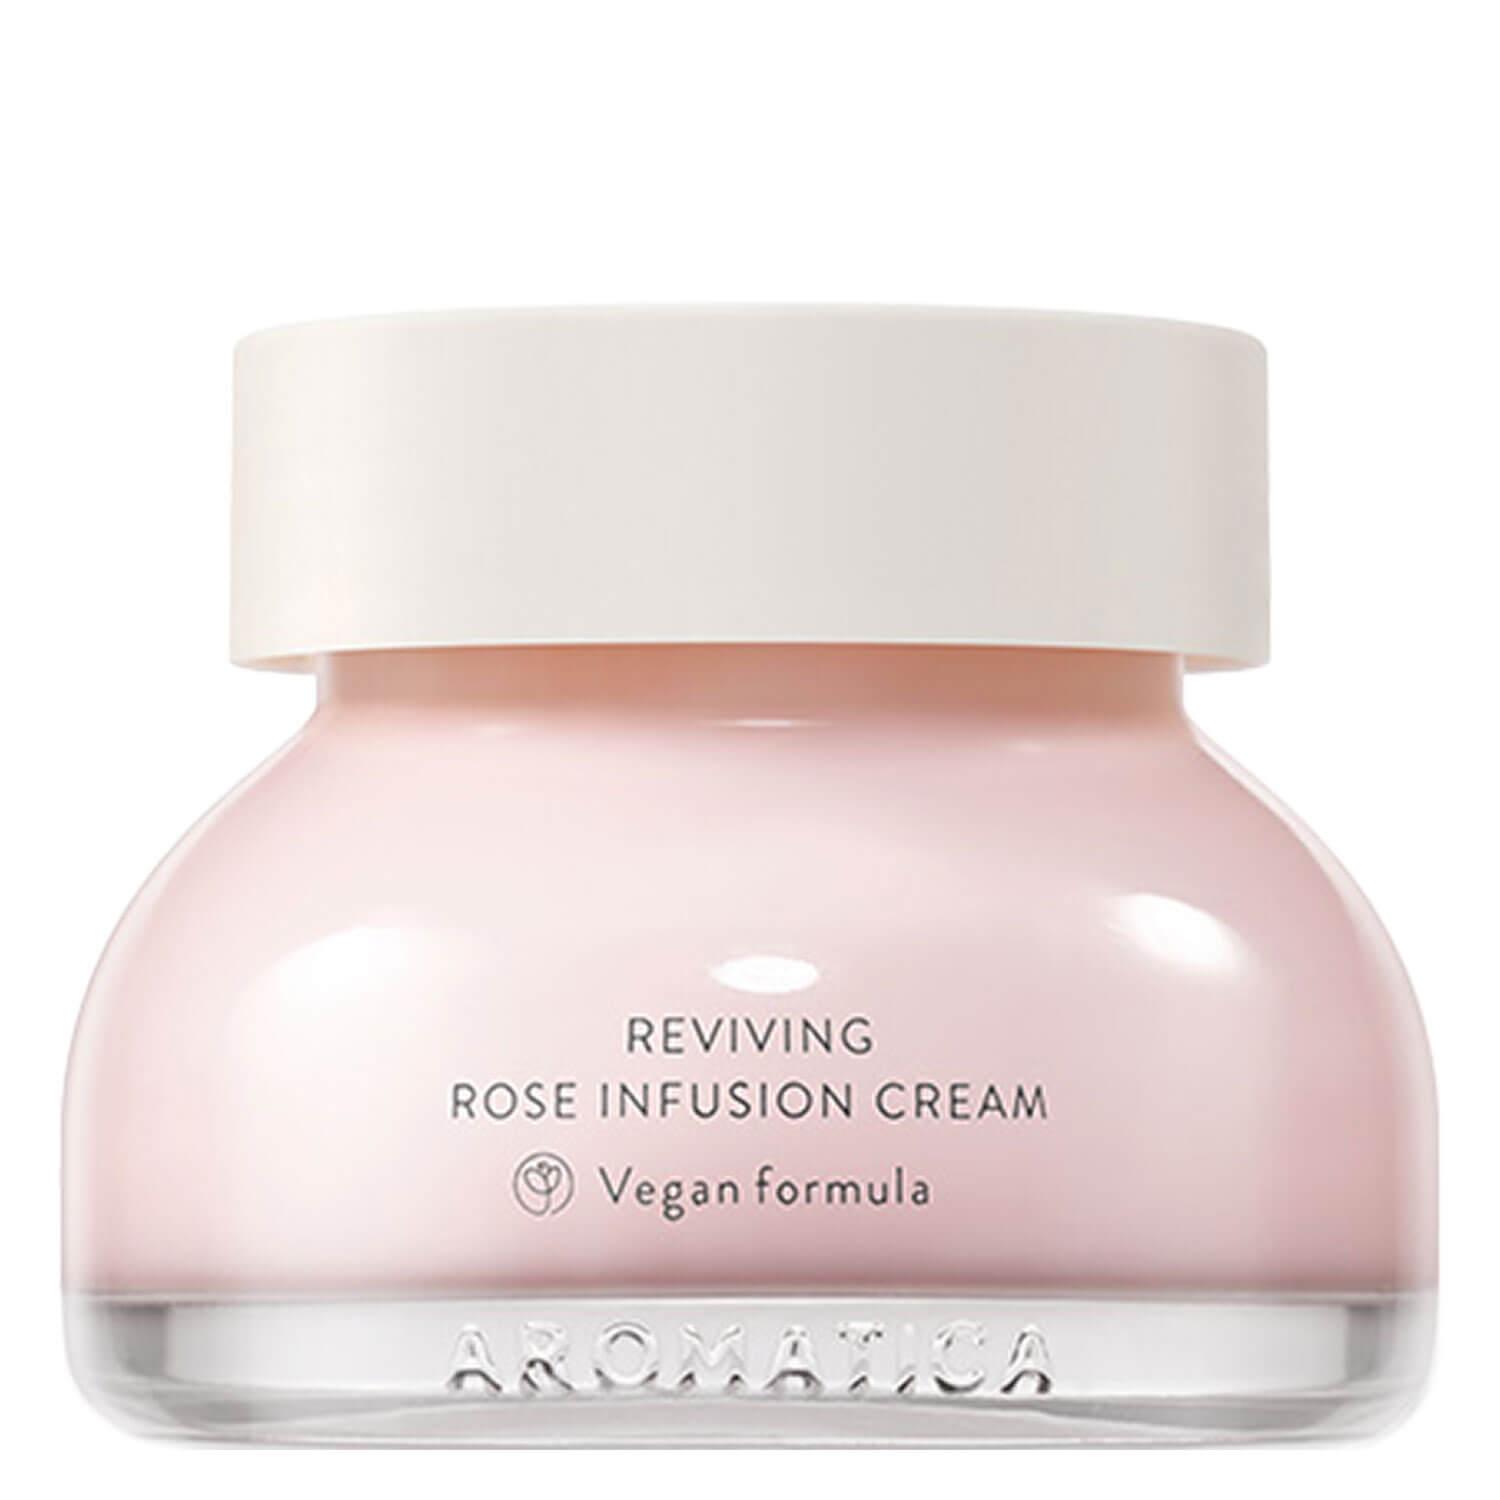 AROMATICA - Reviving Rose Infusion Cream